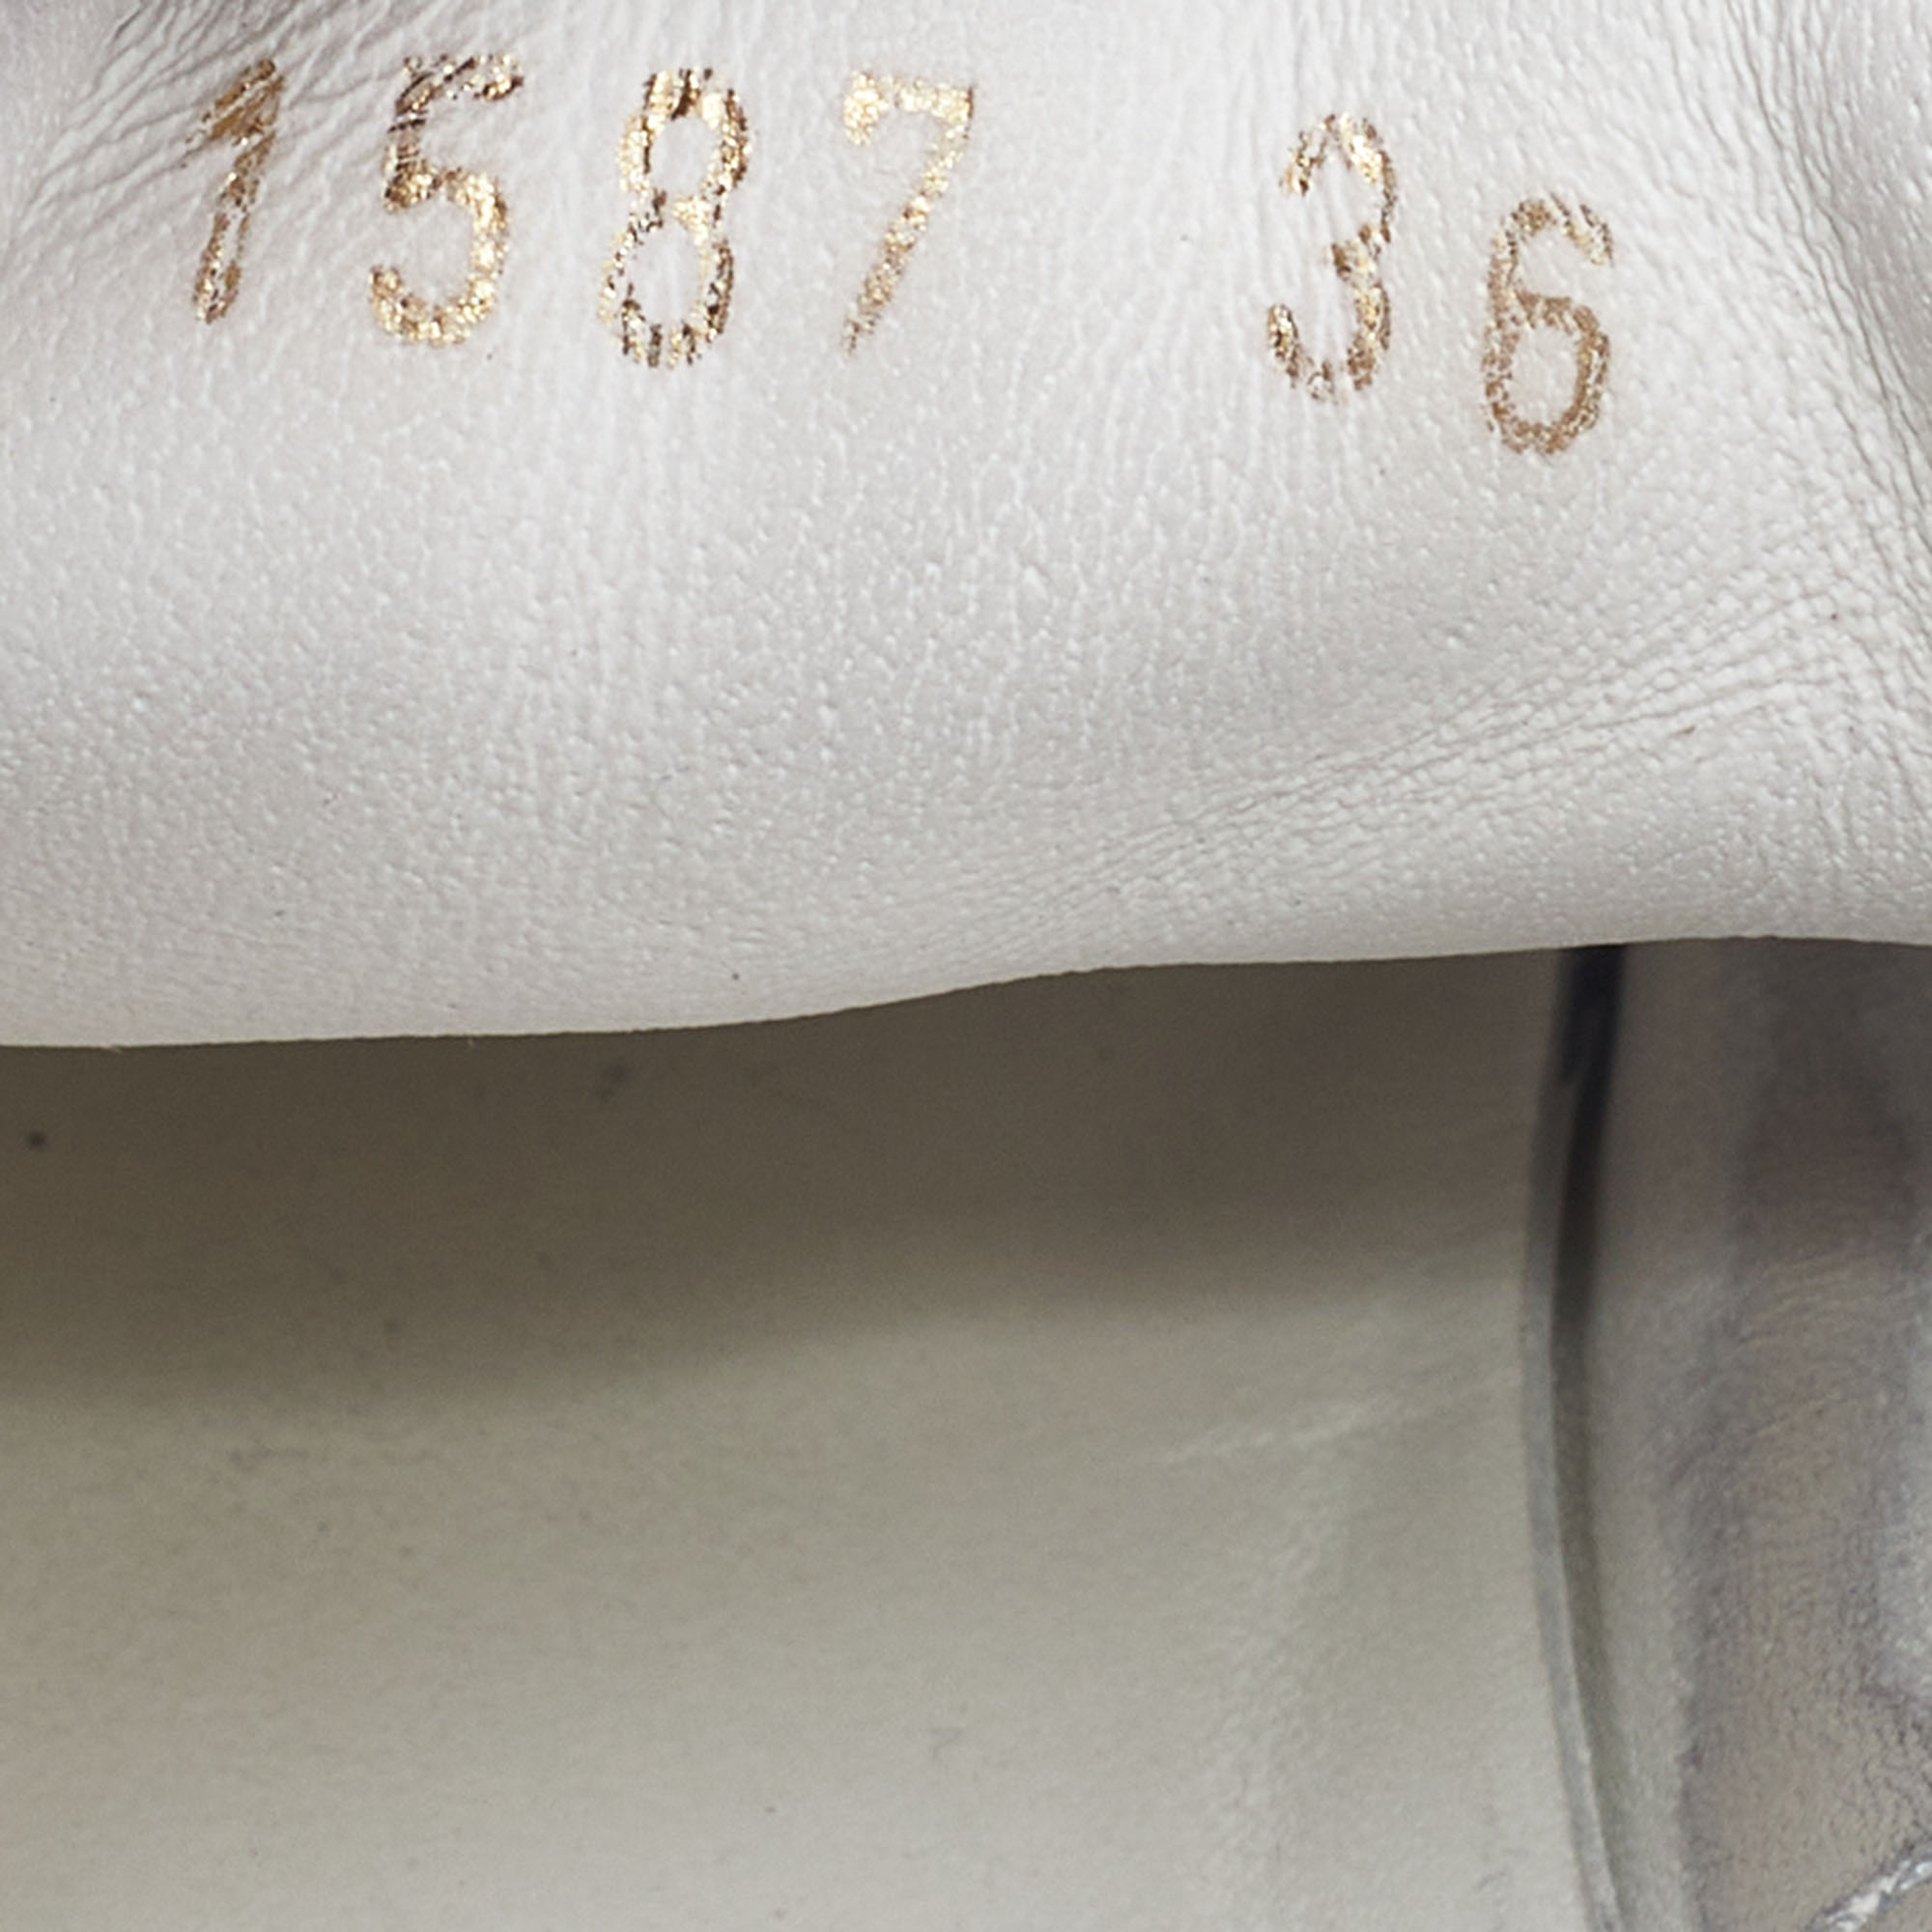 Dolce & Gabbana White Leather Portofino Low Top Sneakers Size 36